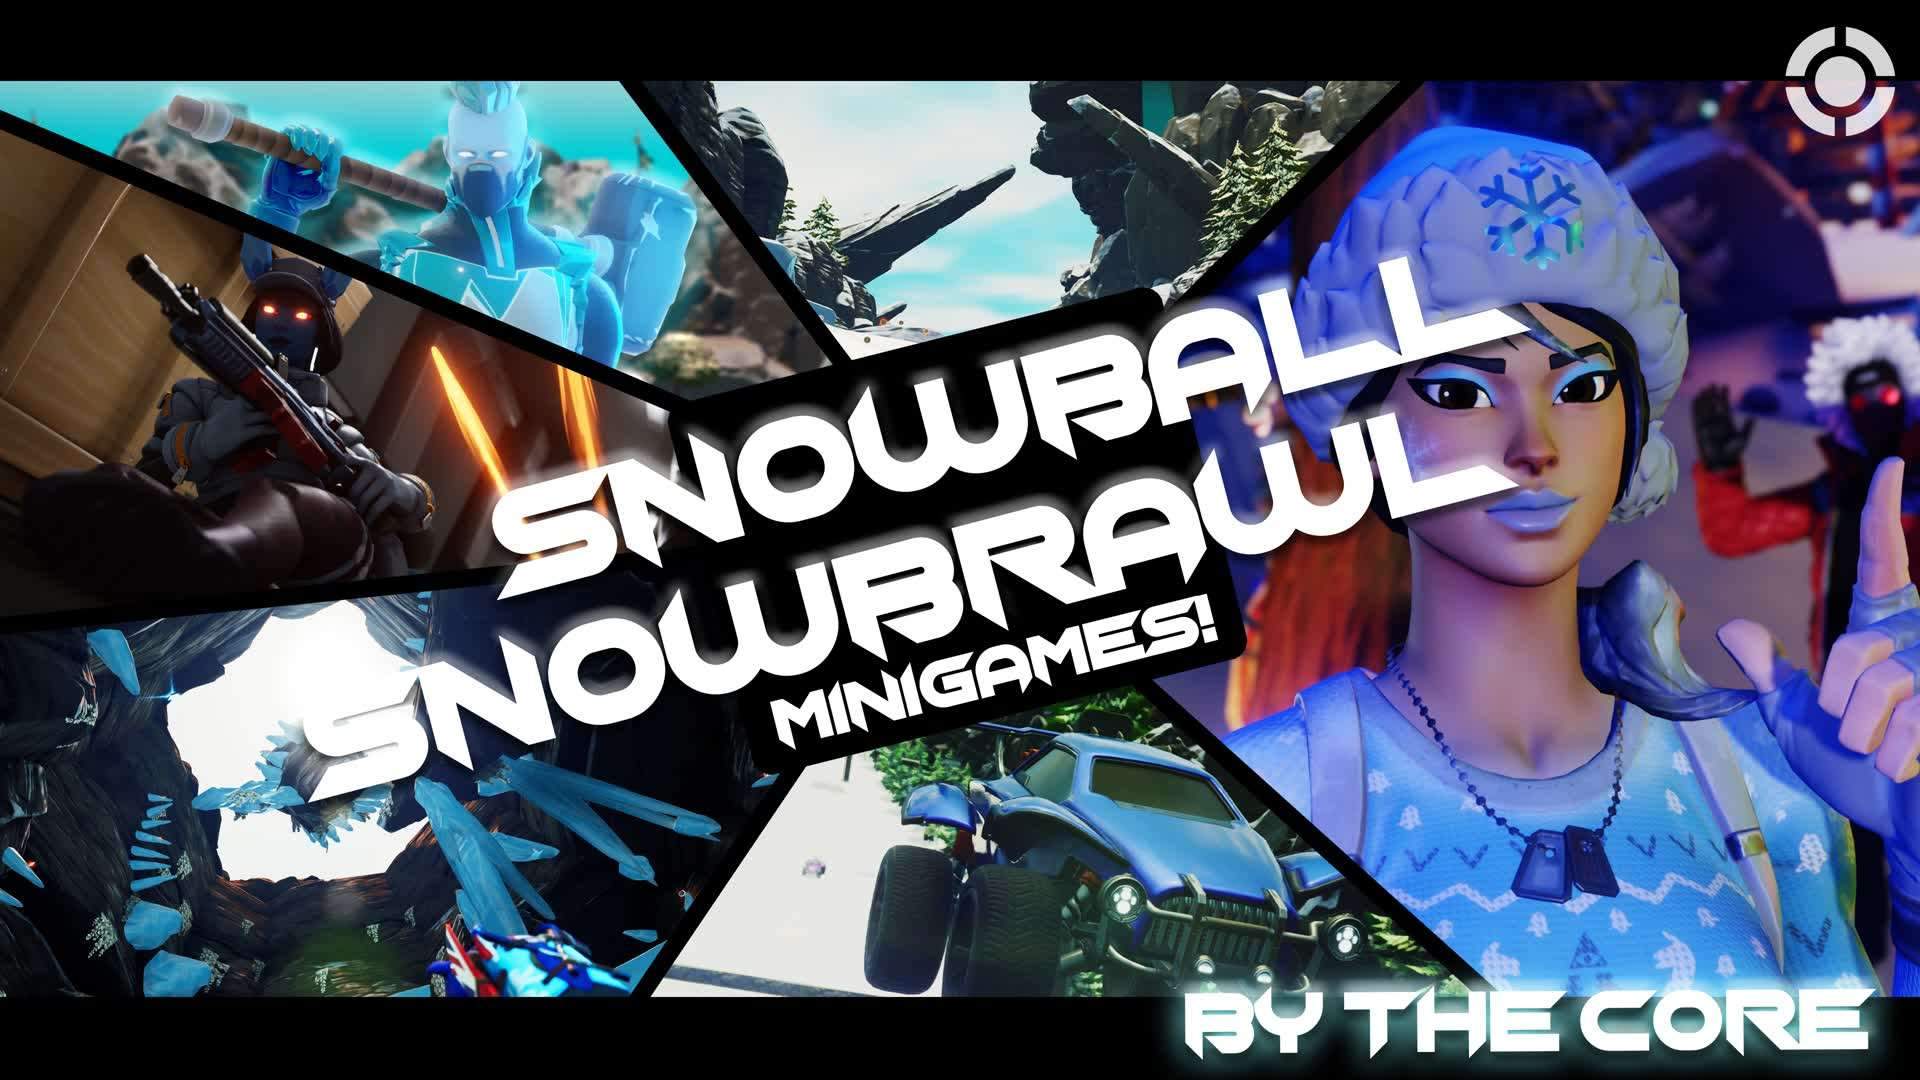 Snowball Snowbrawl - Mini-Games!